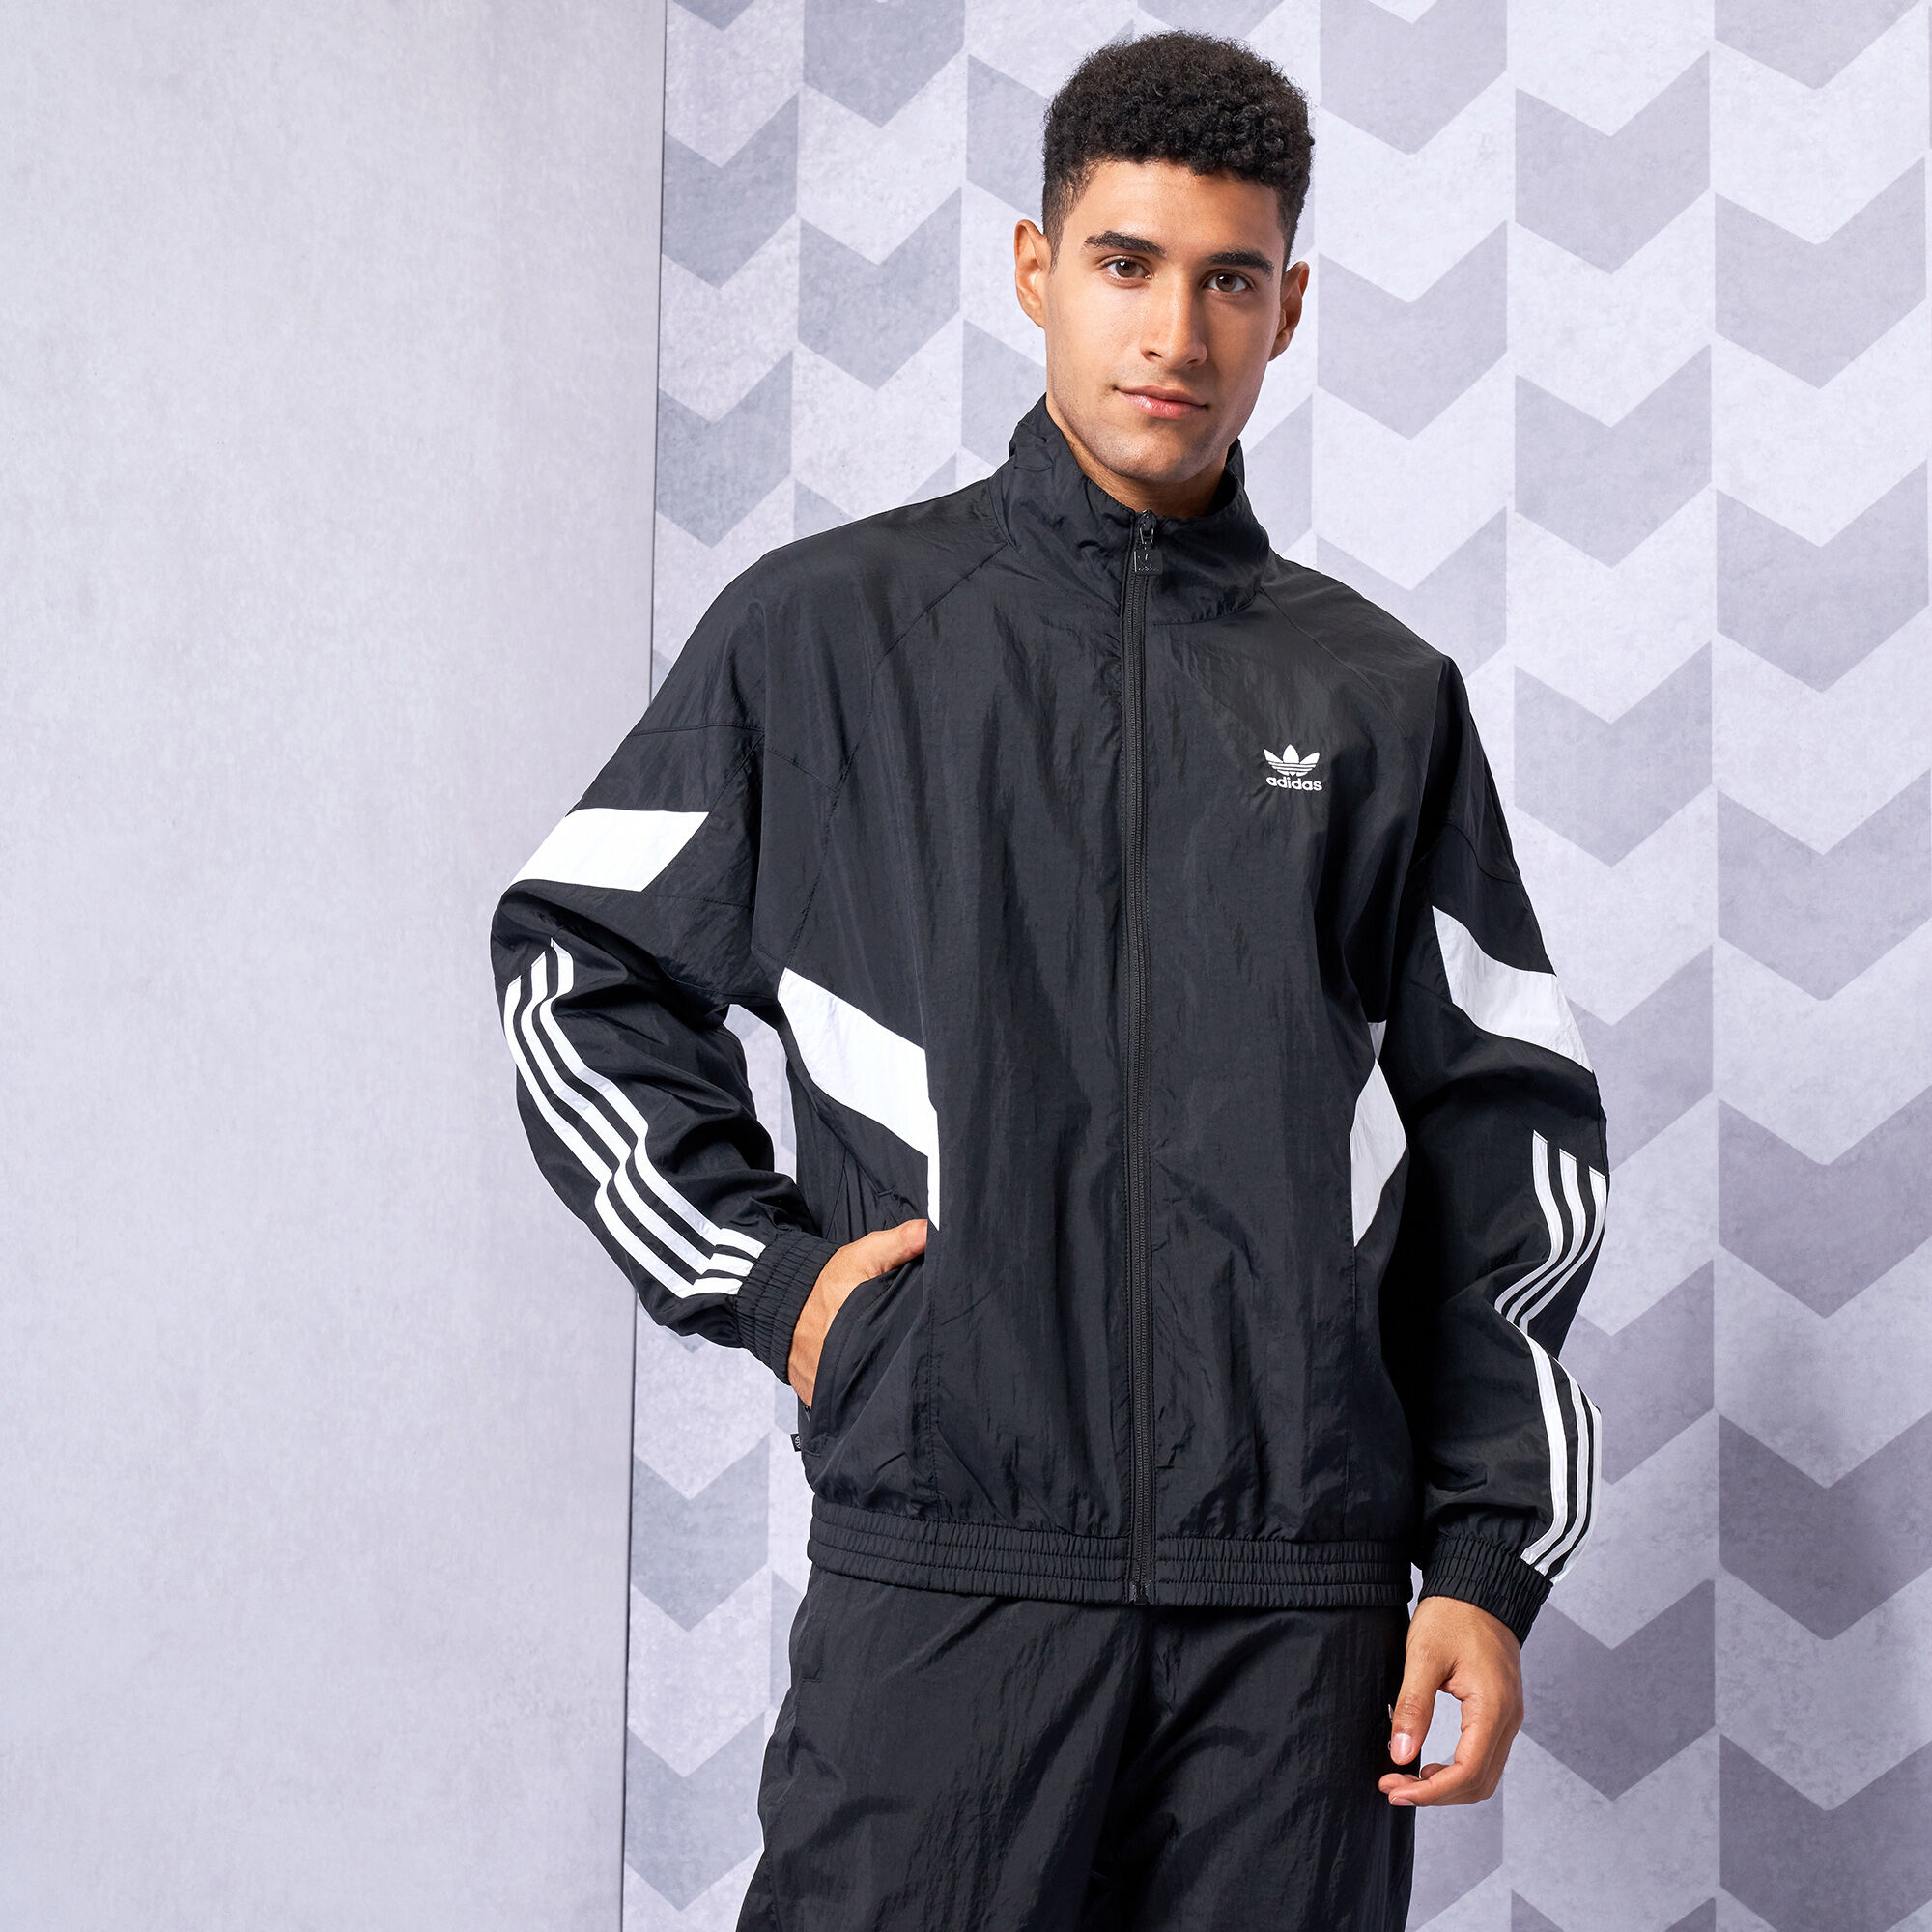 Adidas Originals Jackets in Kuwait | Buy Online | Dropkick